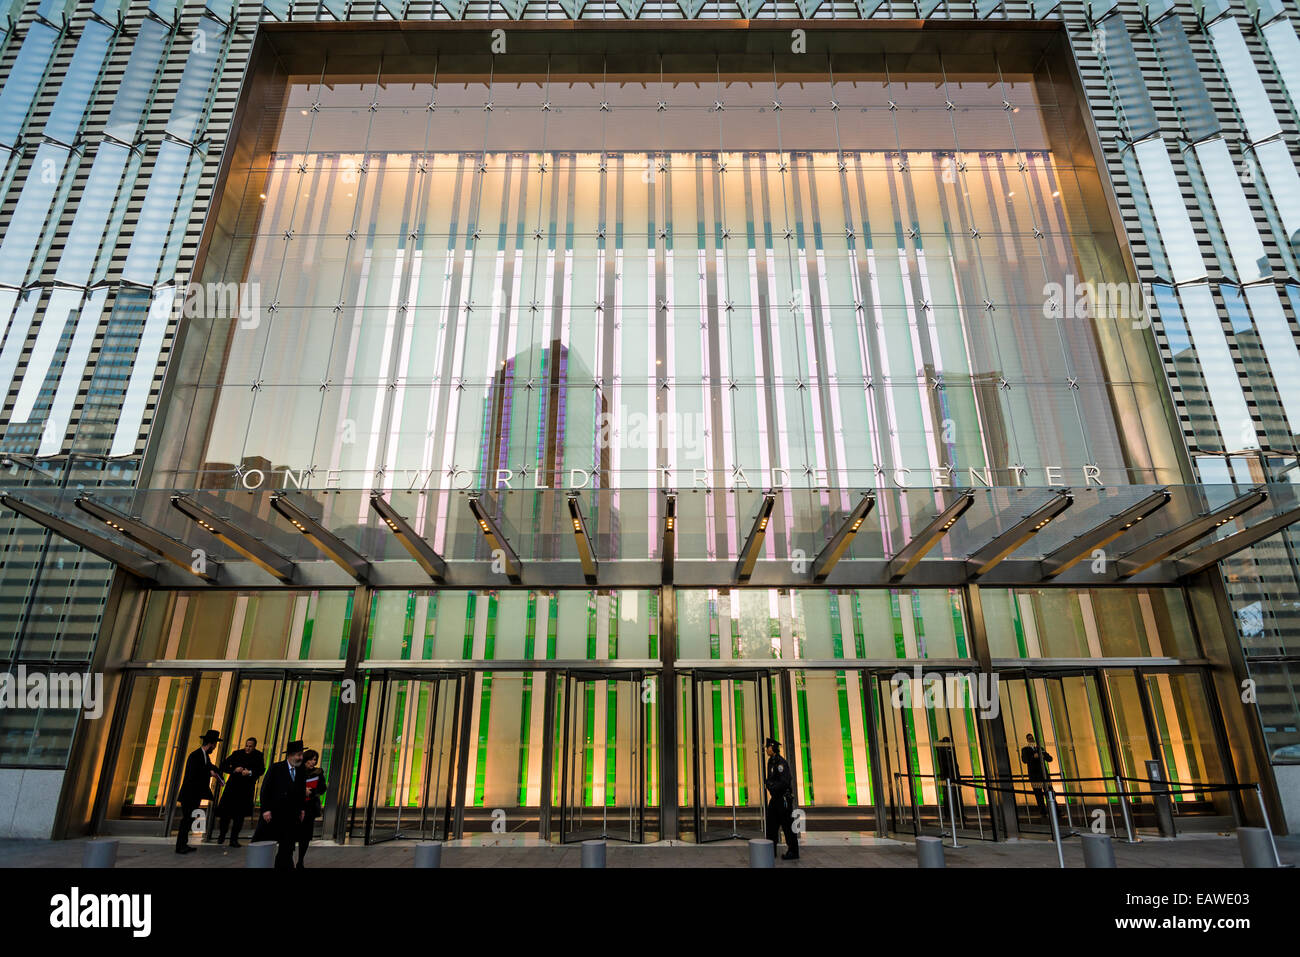 New York, NY 20 Novembre 2014 - Ingresso al One World Trade Center (Freedom Tower) Foto Stock